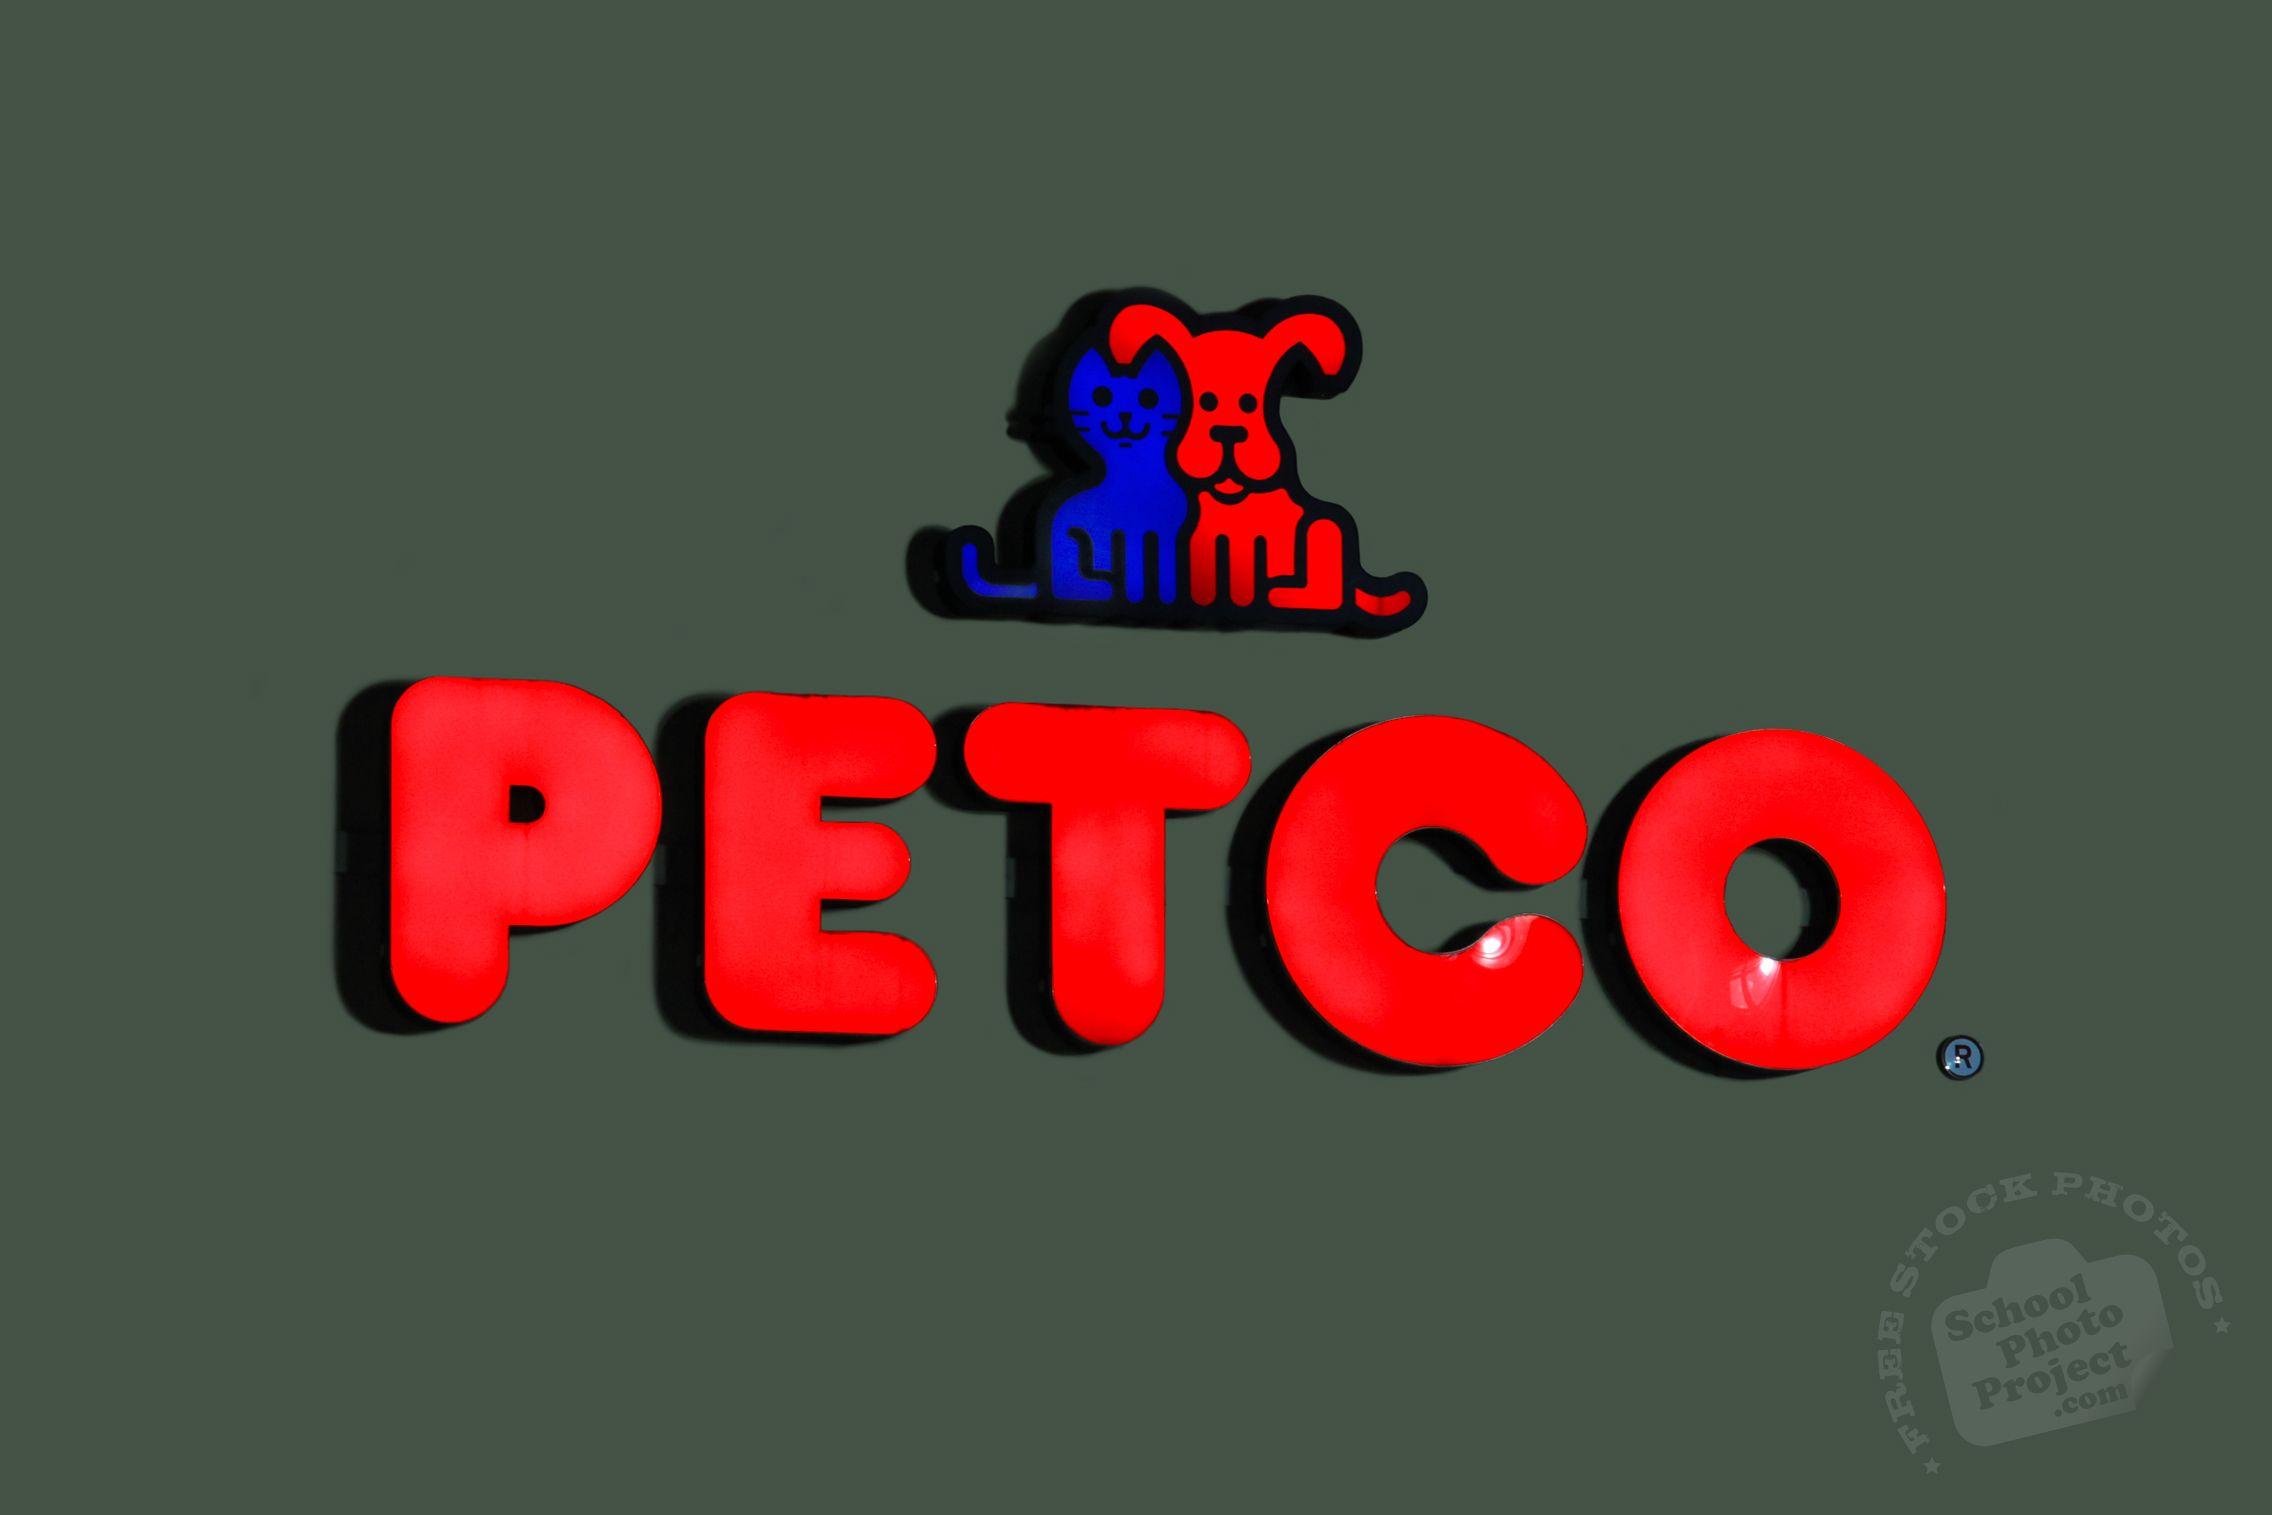 Petco Logo - FREE Petco Logo, Petco Pet Store Identity, Popular Company's Brand